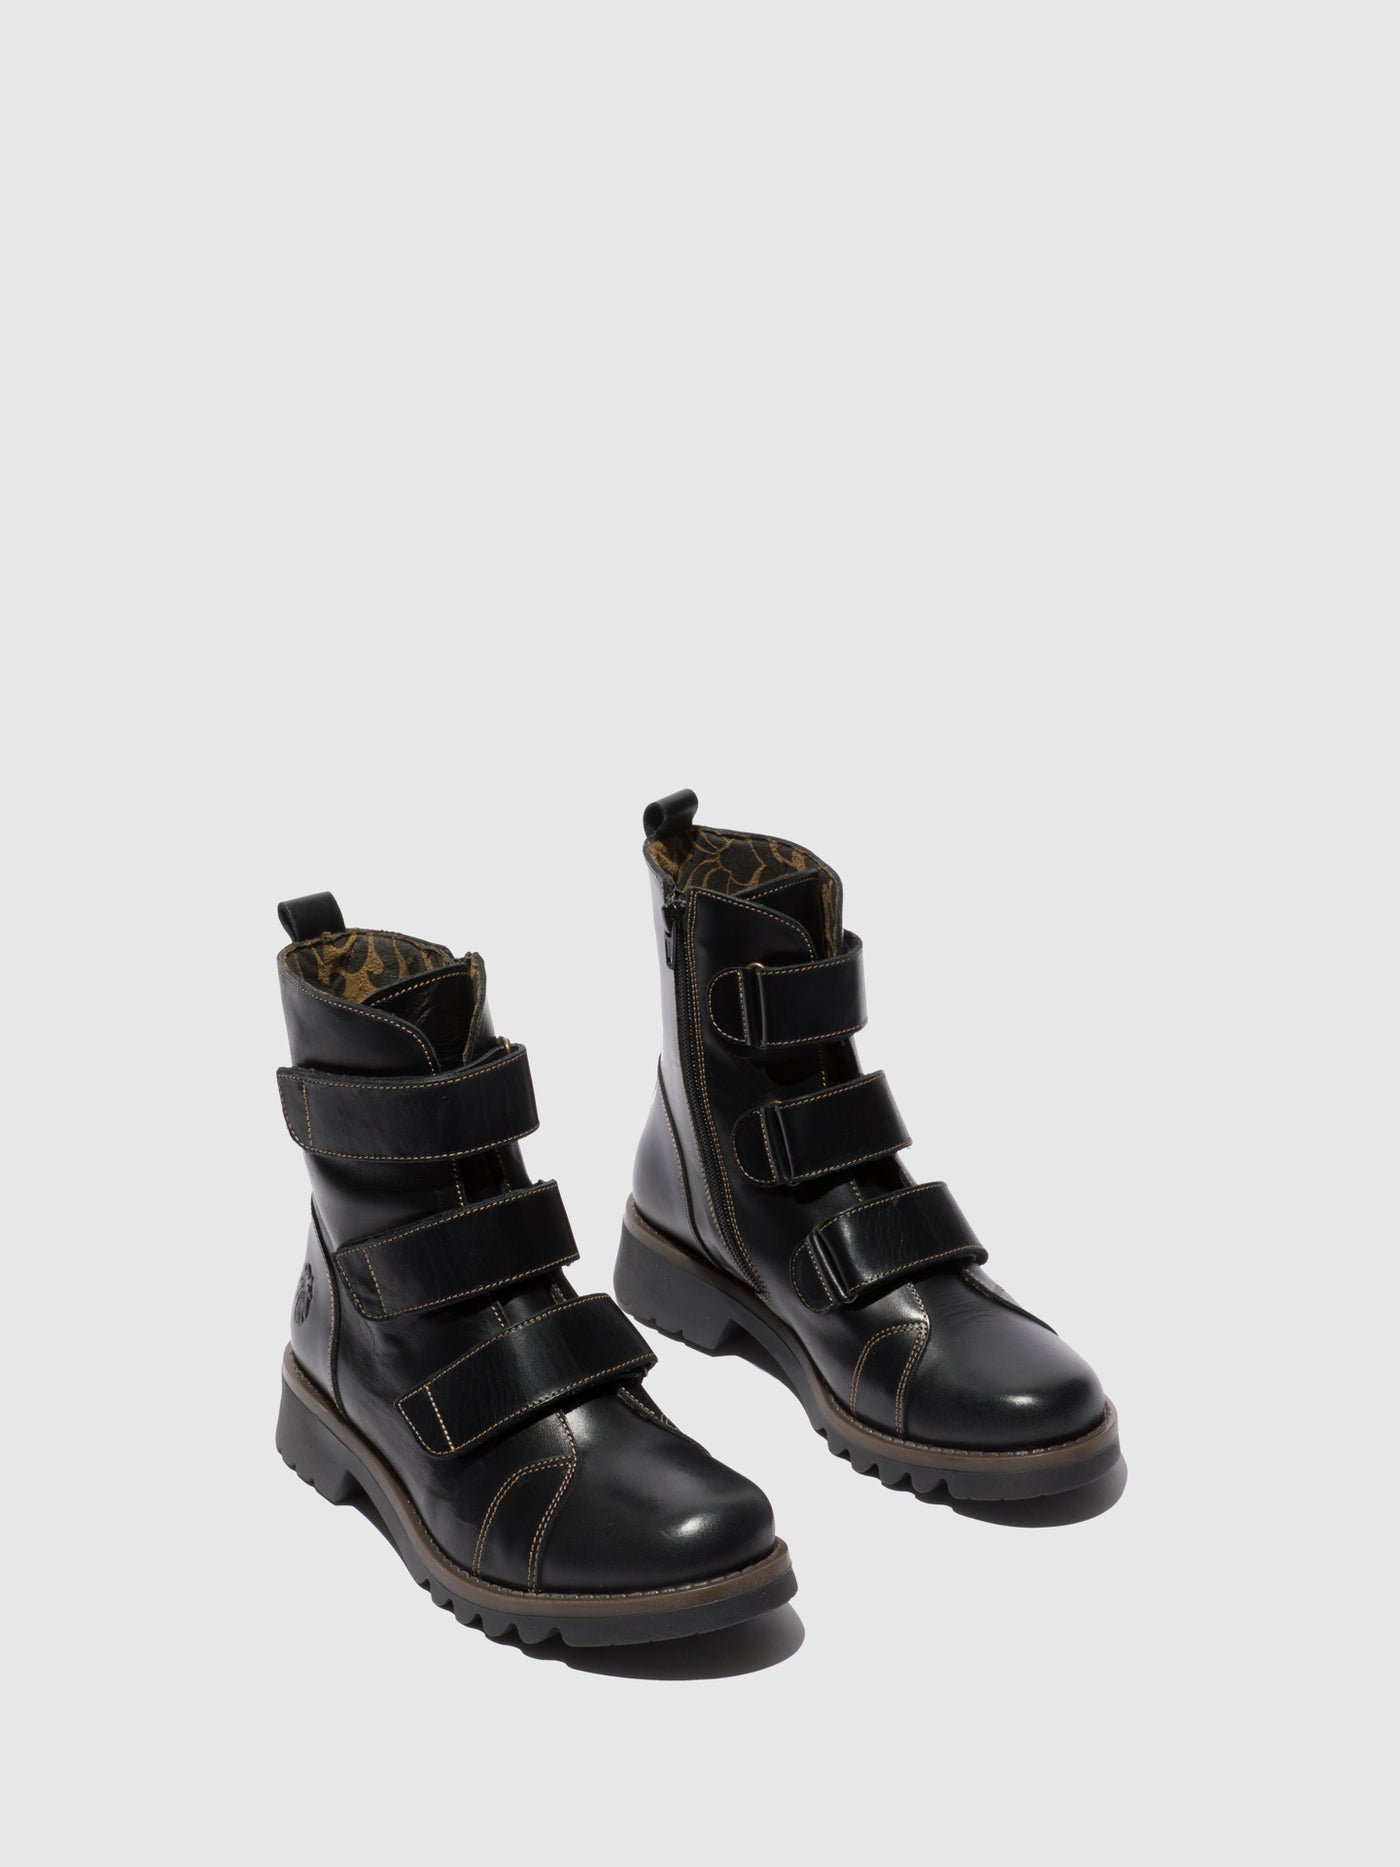 Velcro Ankle Boots RACH790FLY RUG BLACK